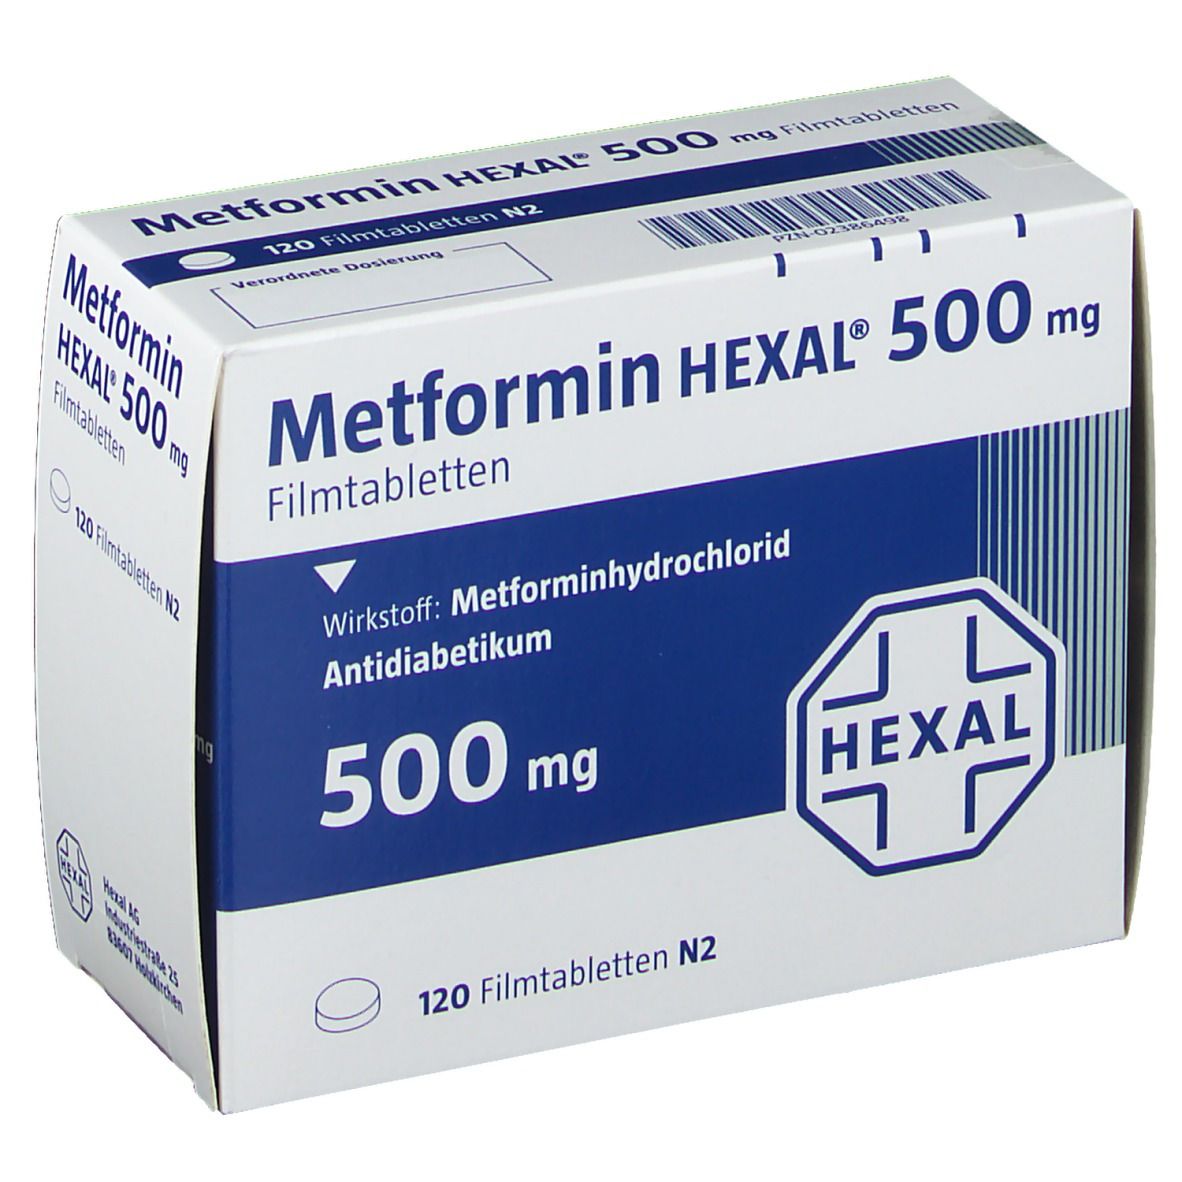 Сколько дней пьют метформин. Metformin Hexal 1000 мг. Метформин 500 мг производитель. Таблетки метформин 500мг. Метформин 500 производители.